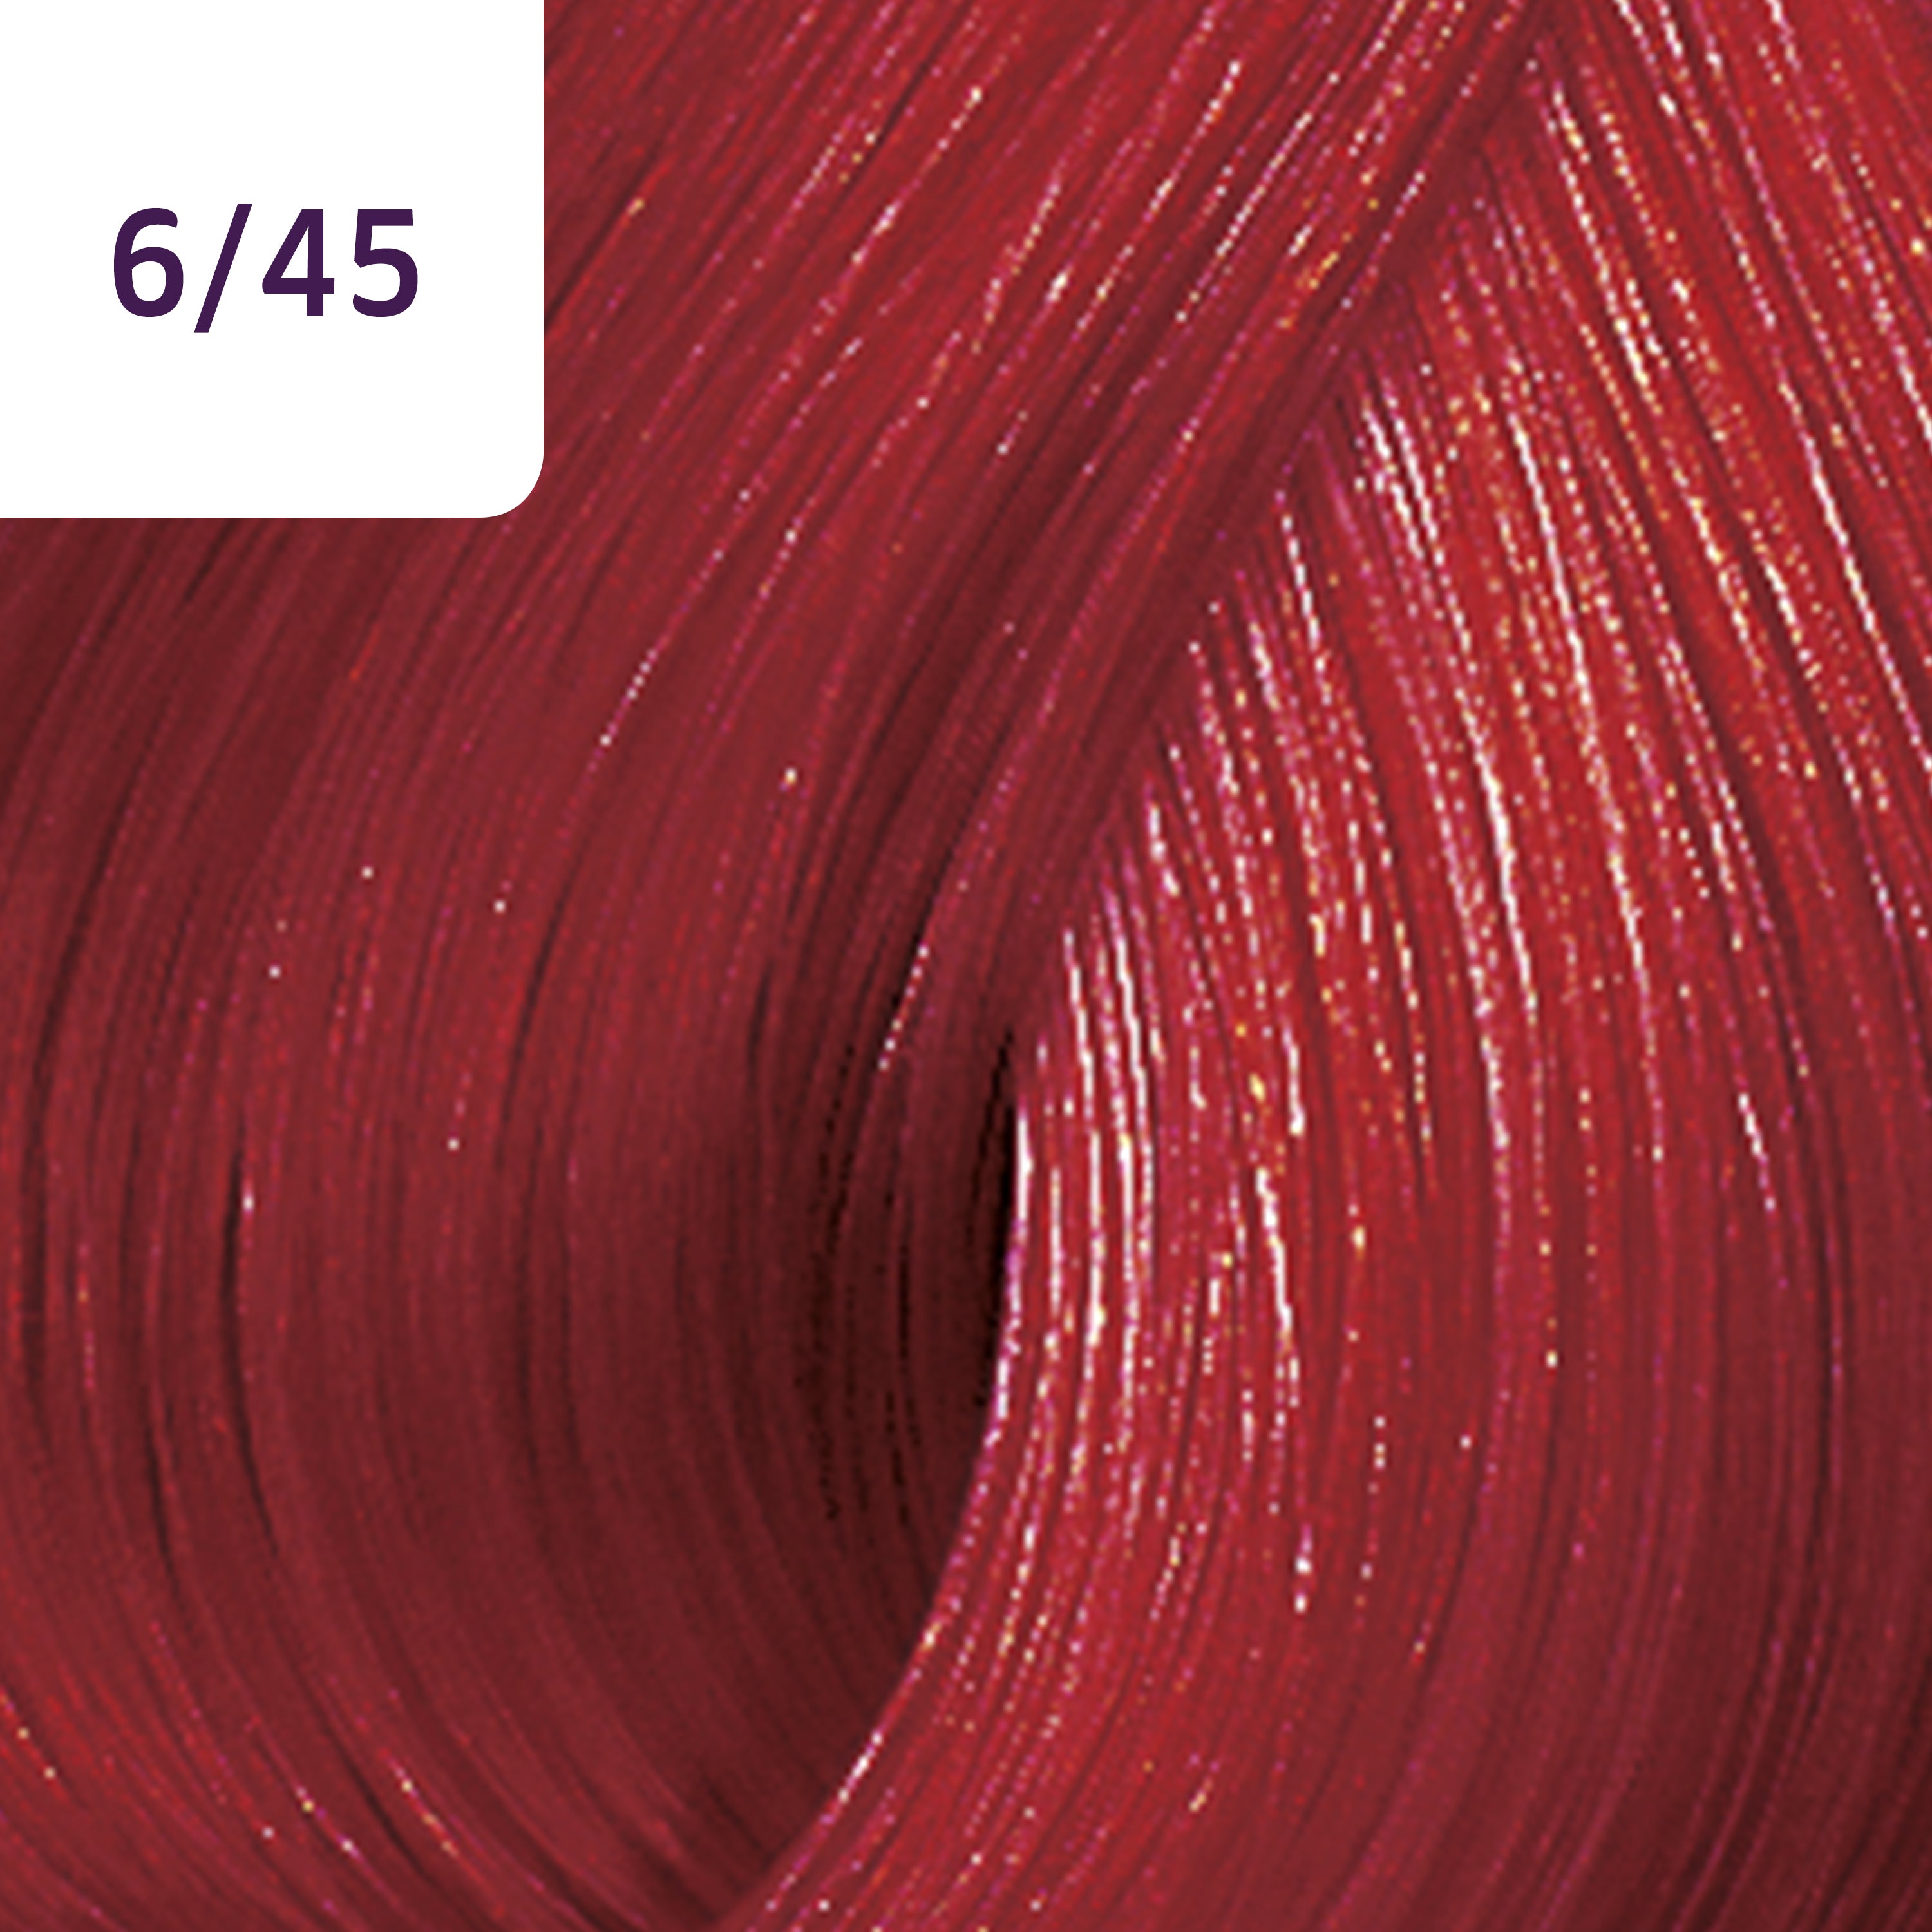 Wella Professional Color Touch Vibrant Reds 6/45 Mørkelblond rød-mahogni